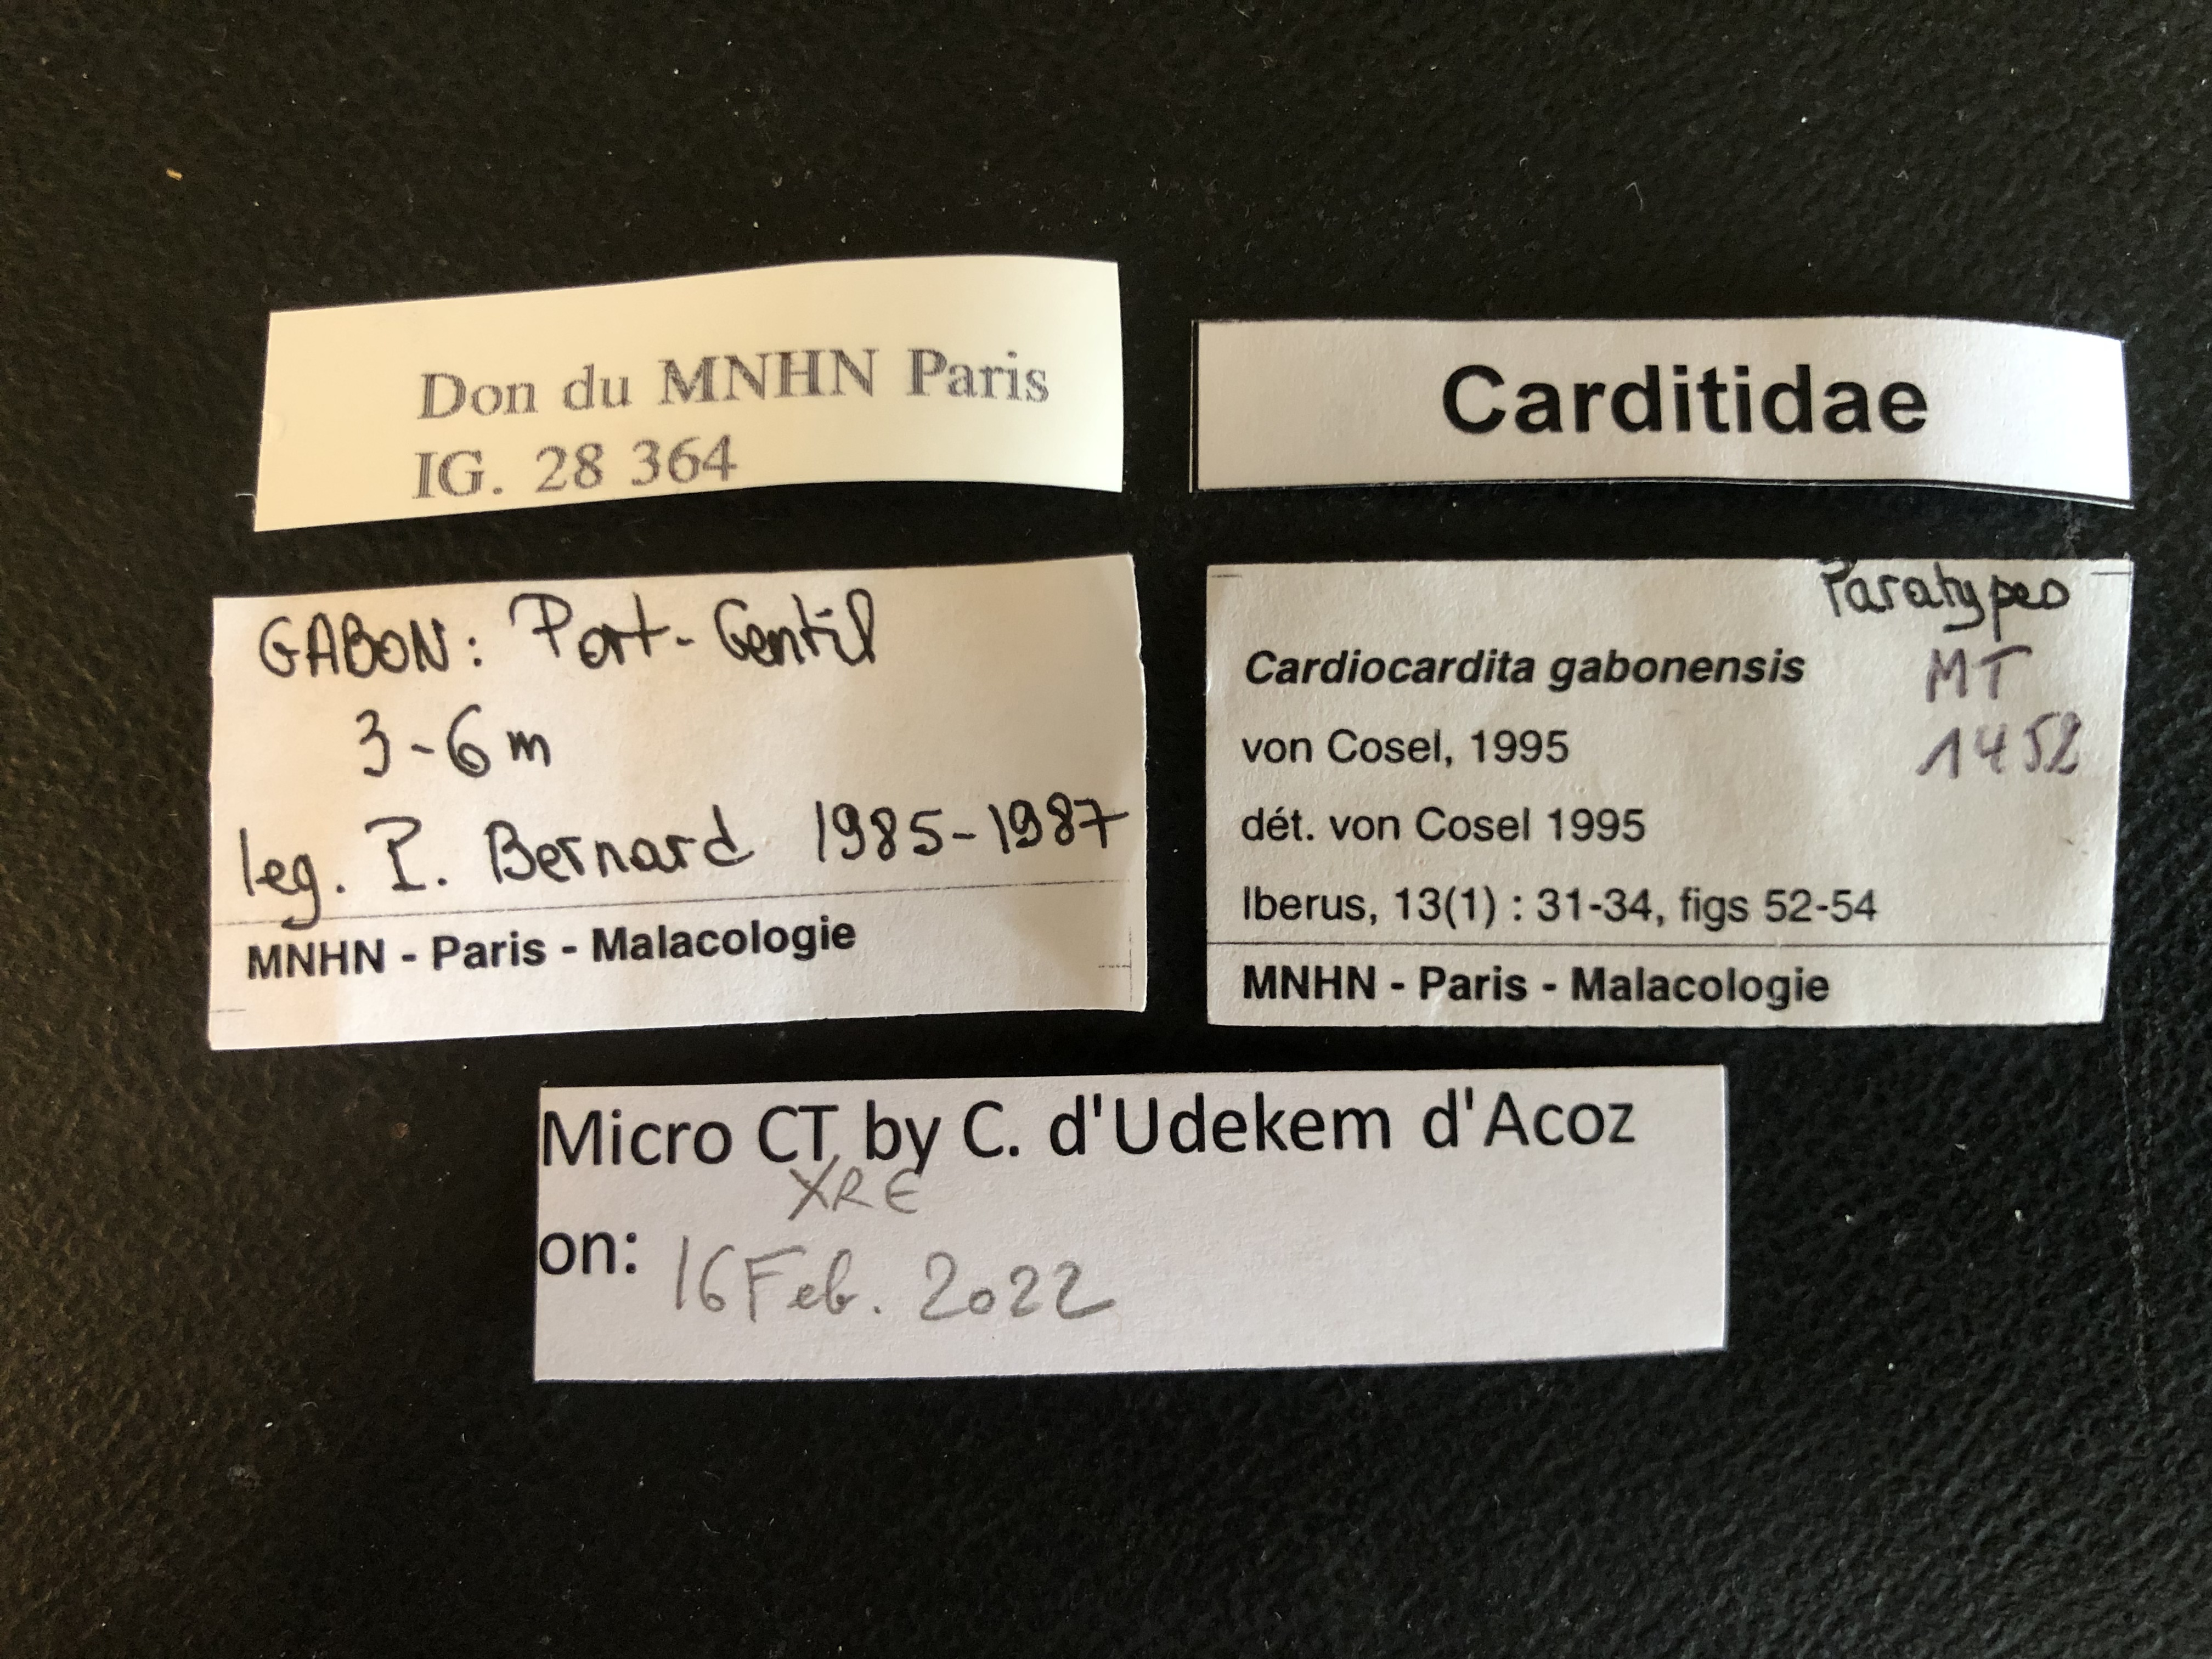 MT 1452 Cardiocardita gabonensis Labels